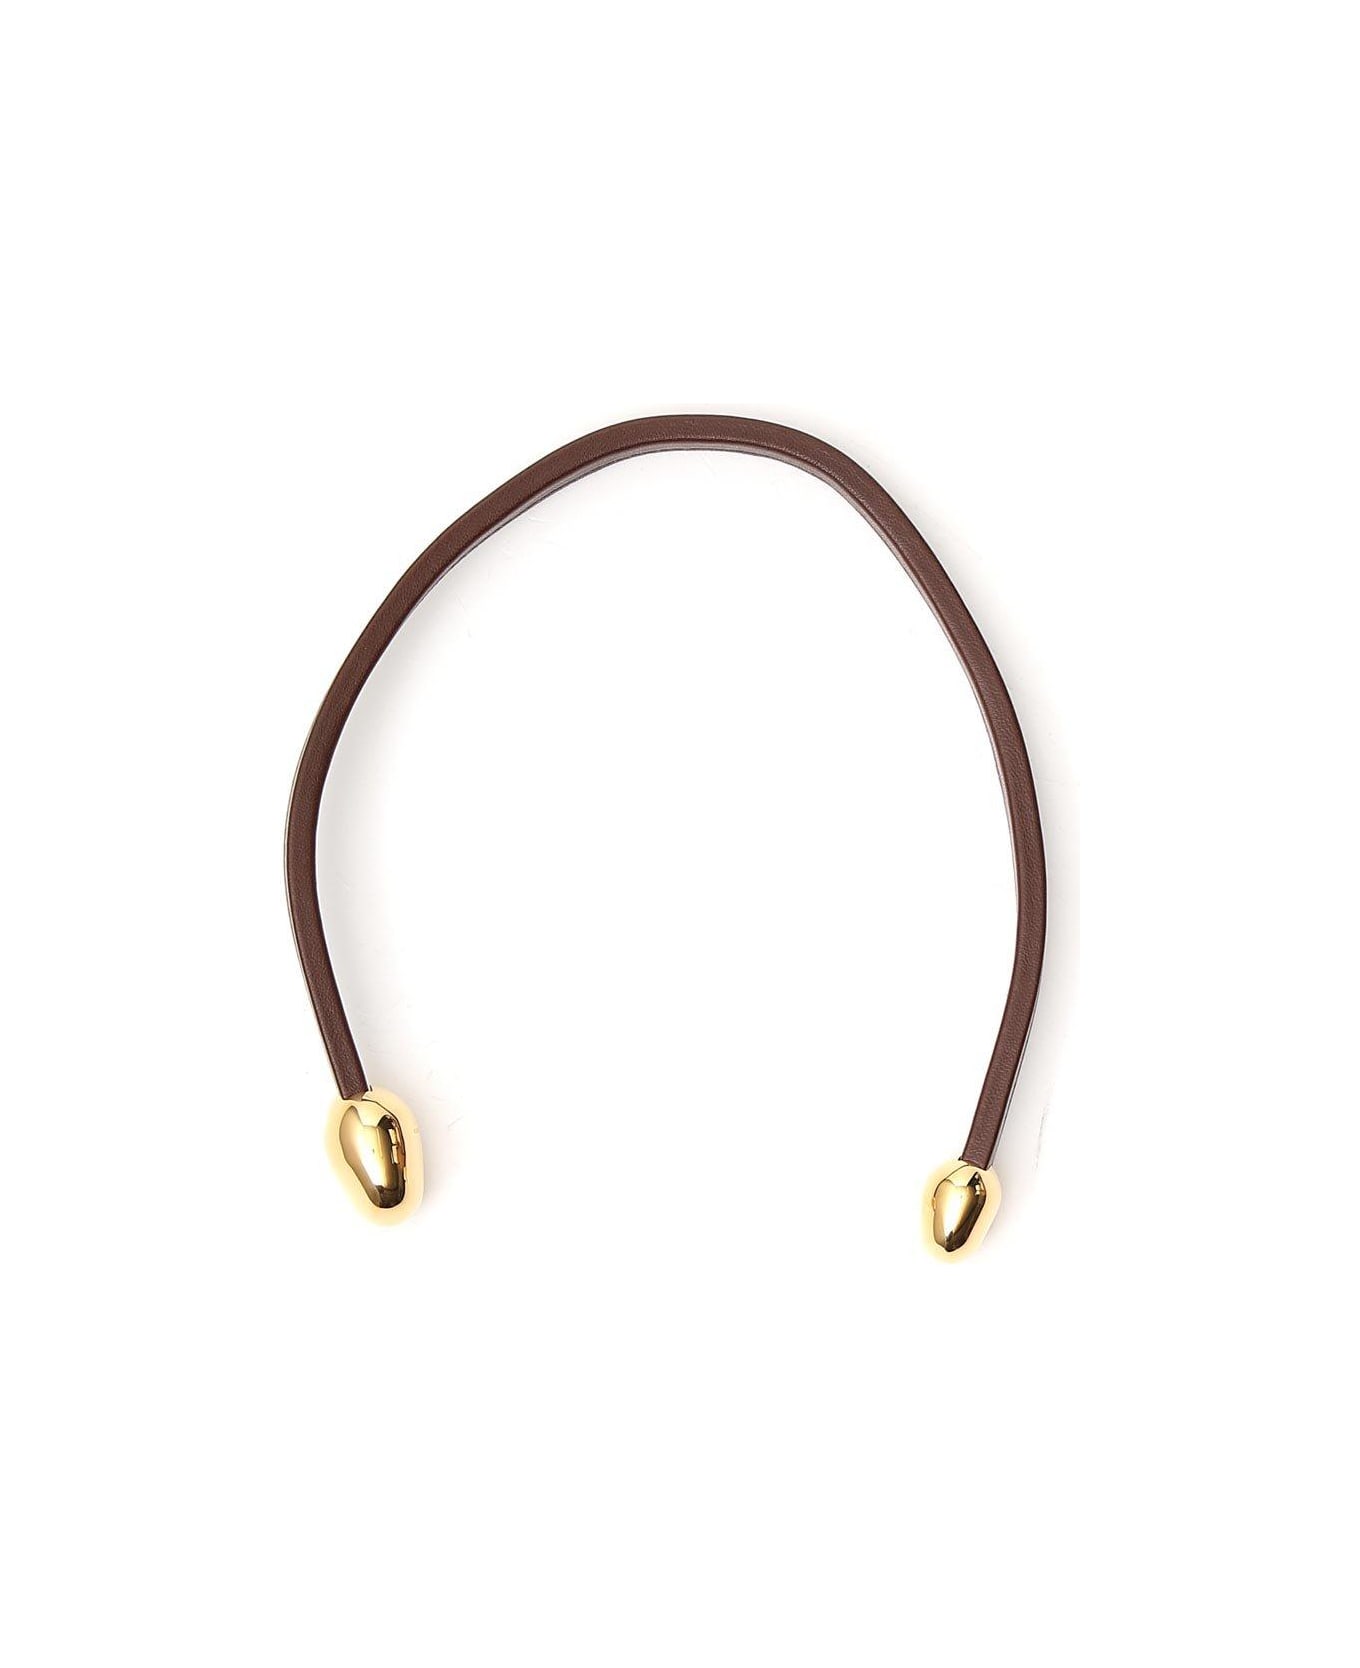 Bottega Veneta Leather Open Necklace - BROWN